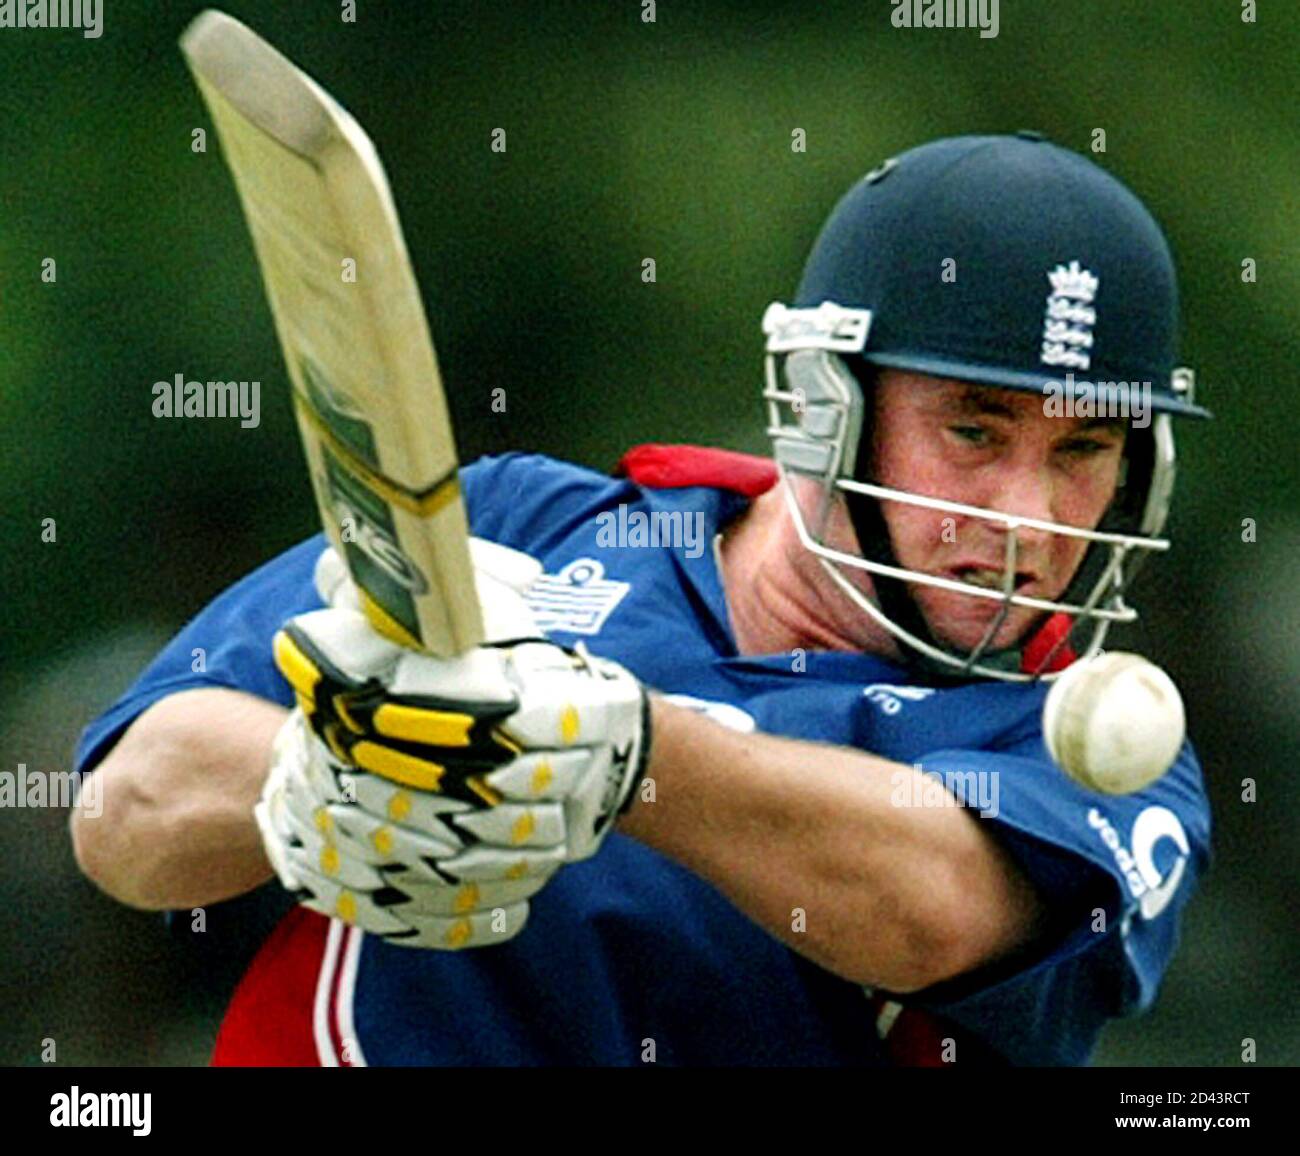 England's Ian Blackwell hits the ball during a one-day match against the Sri Lanka cricket academy XI in Moratuwa, Sri Lanka November 15, 2003. REUTERS/Arko Datta    PP03110069  AD/TW Stock Photo